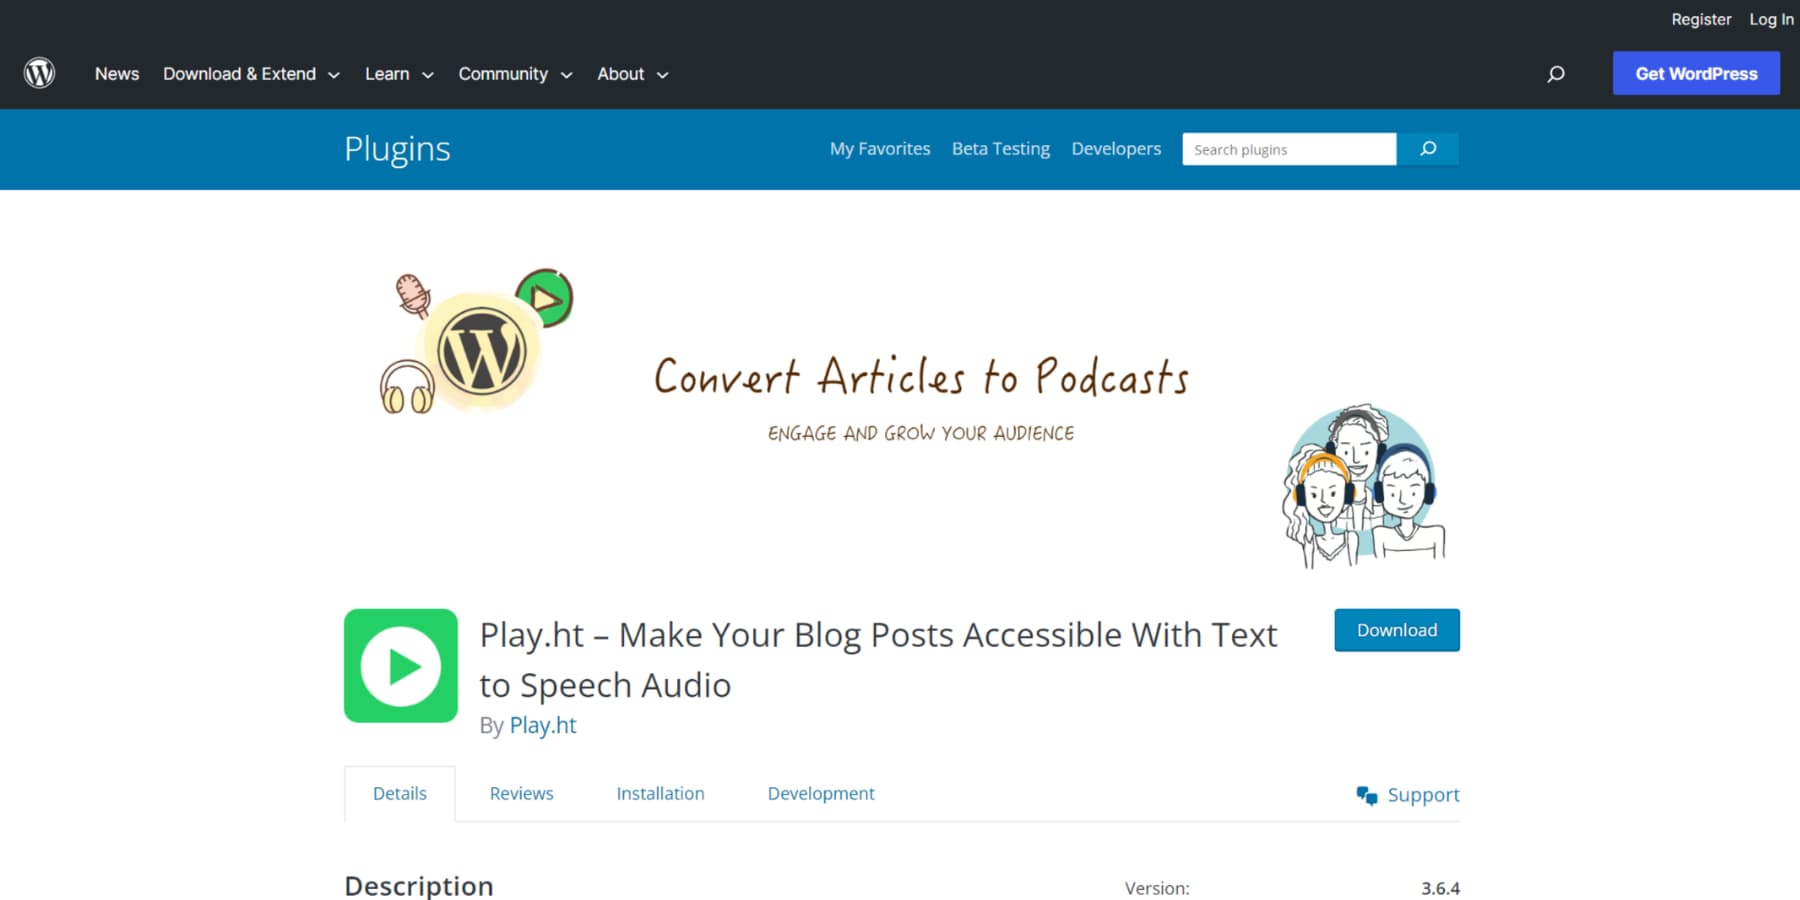 PlayHT's WordPress plugin